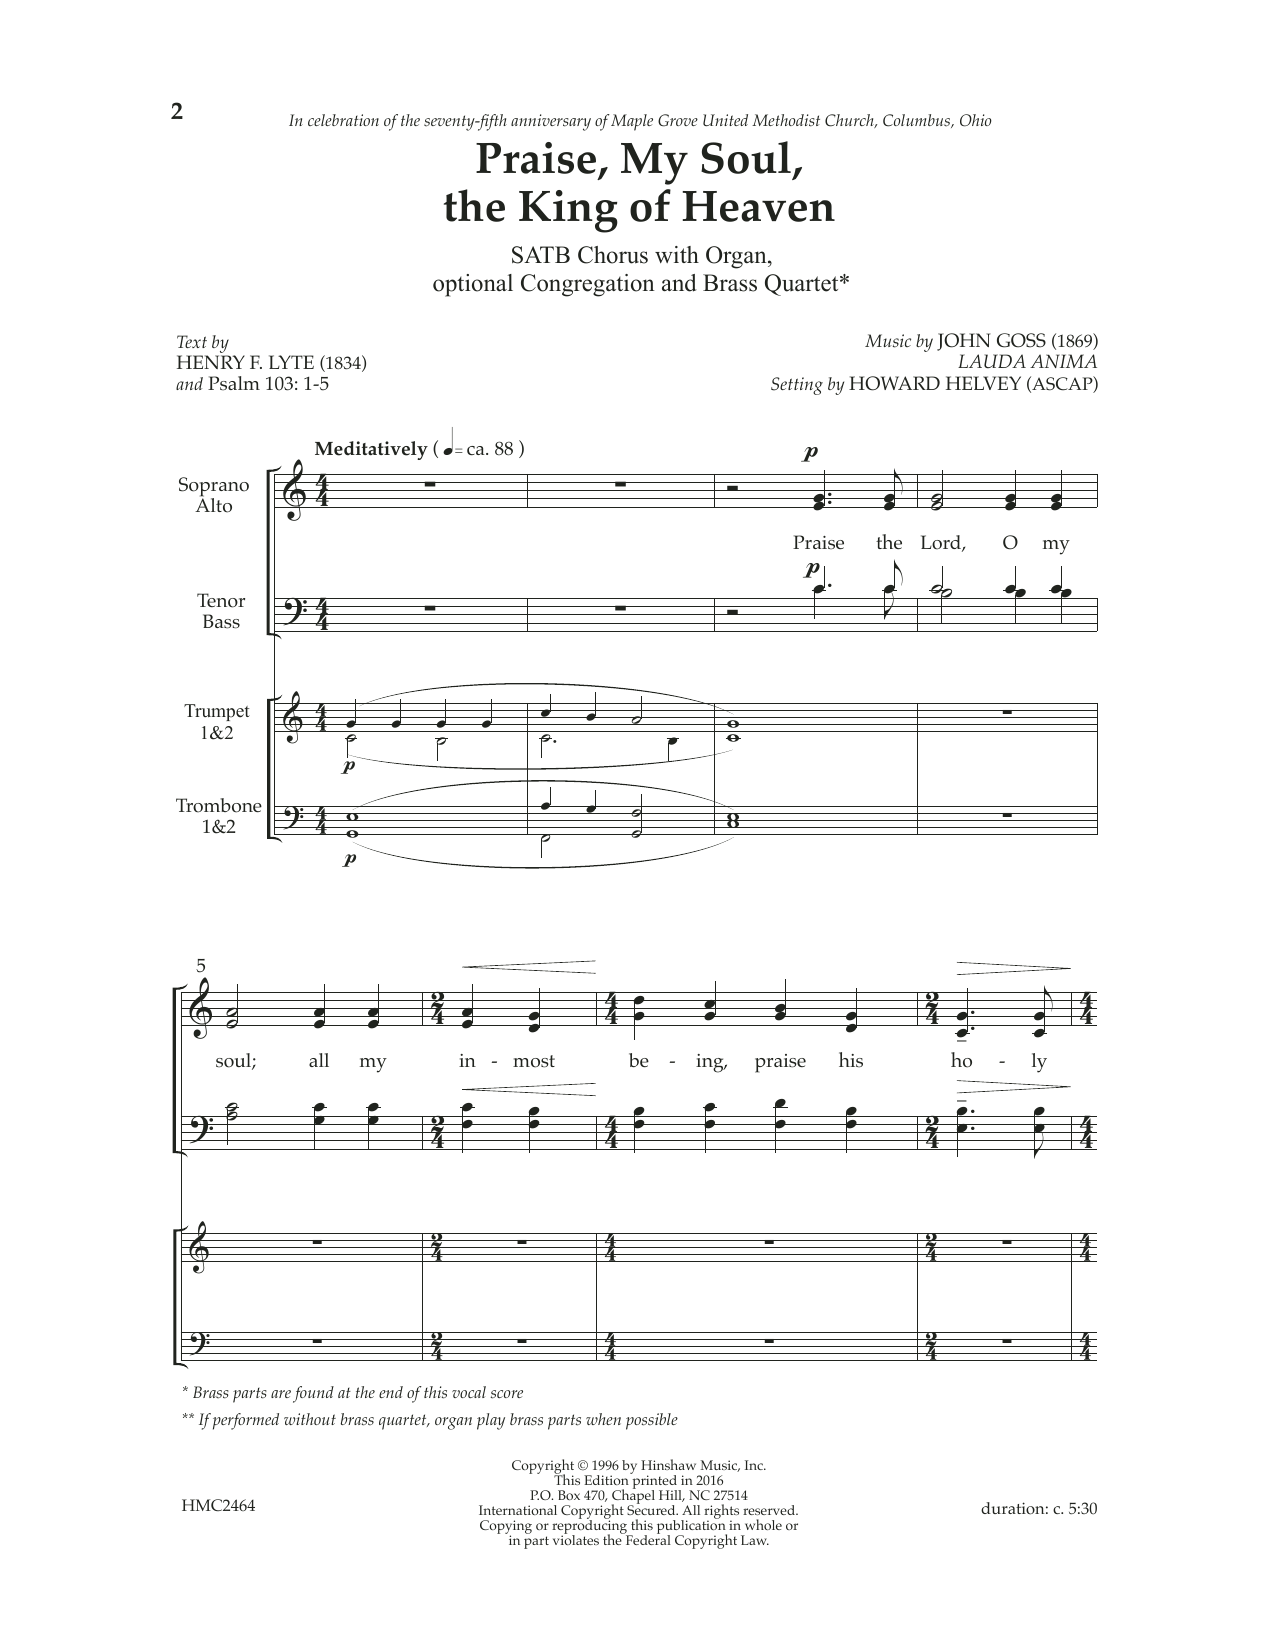 Jon Goss Praise, My Soul, The King of Heaven (arr. Howard Helvey) sheet music notes and chords arranged for SATB Choir